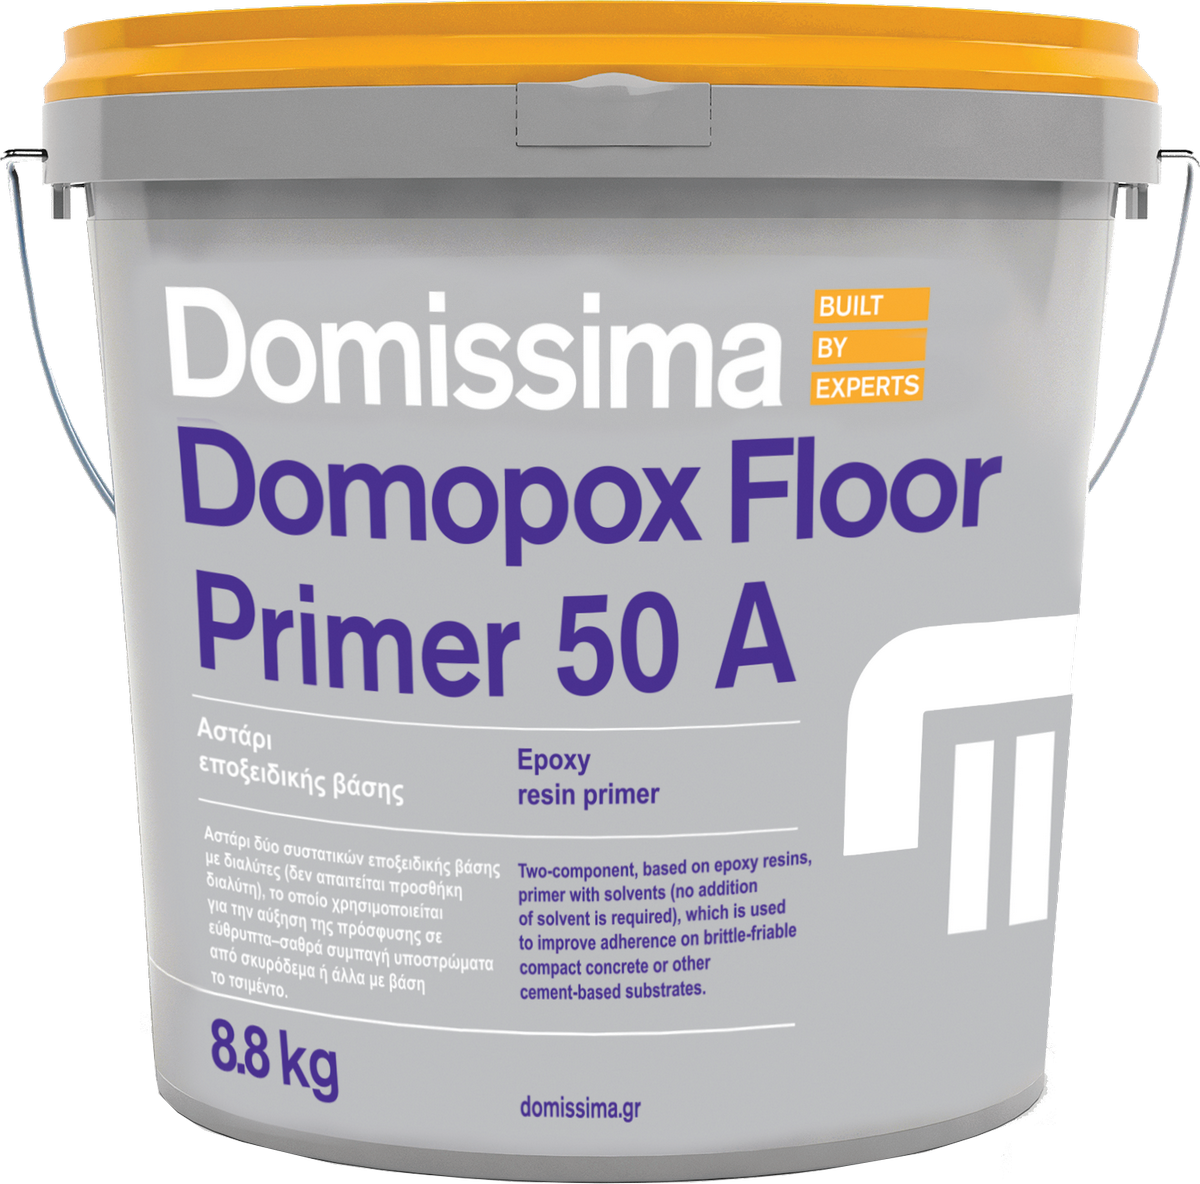 Domopox Floor Primer 50